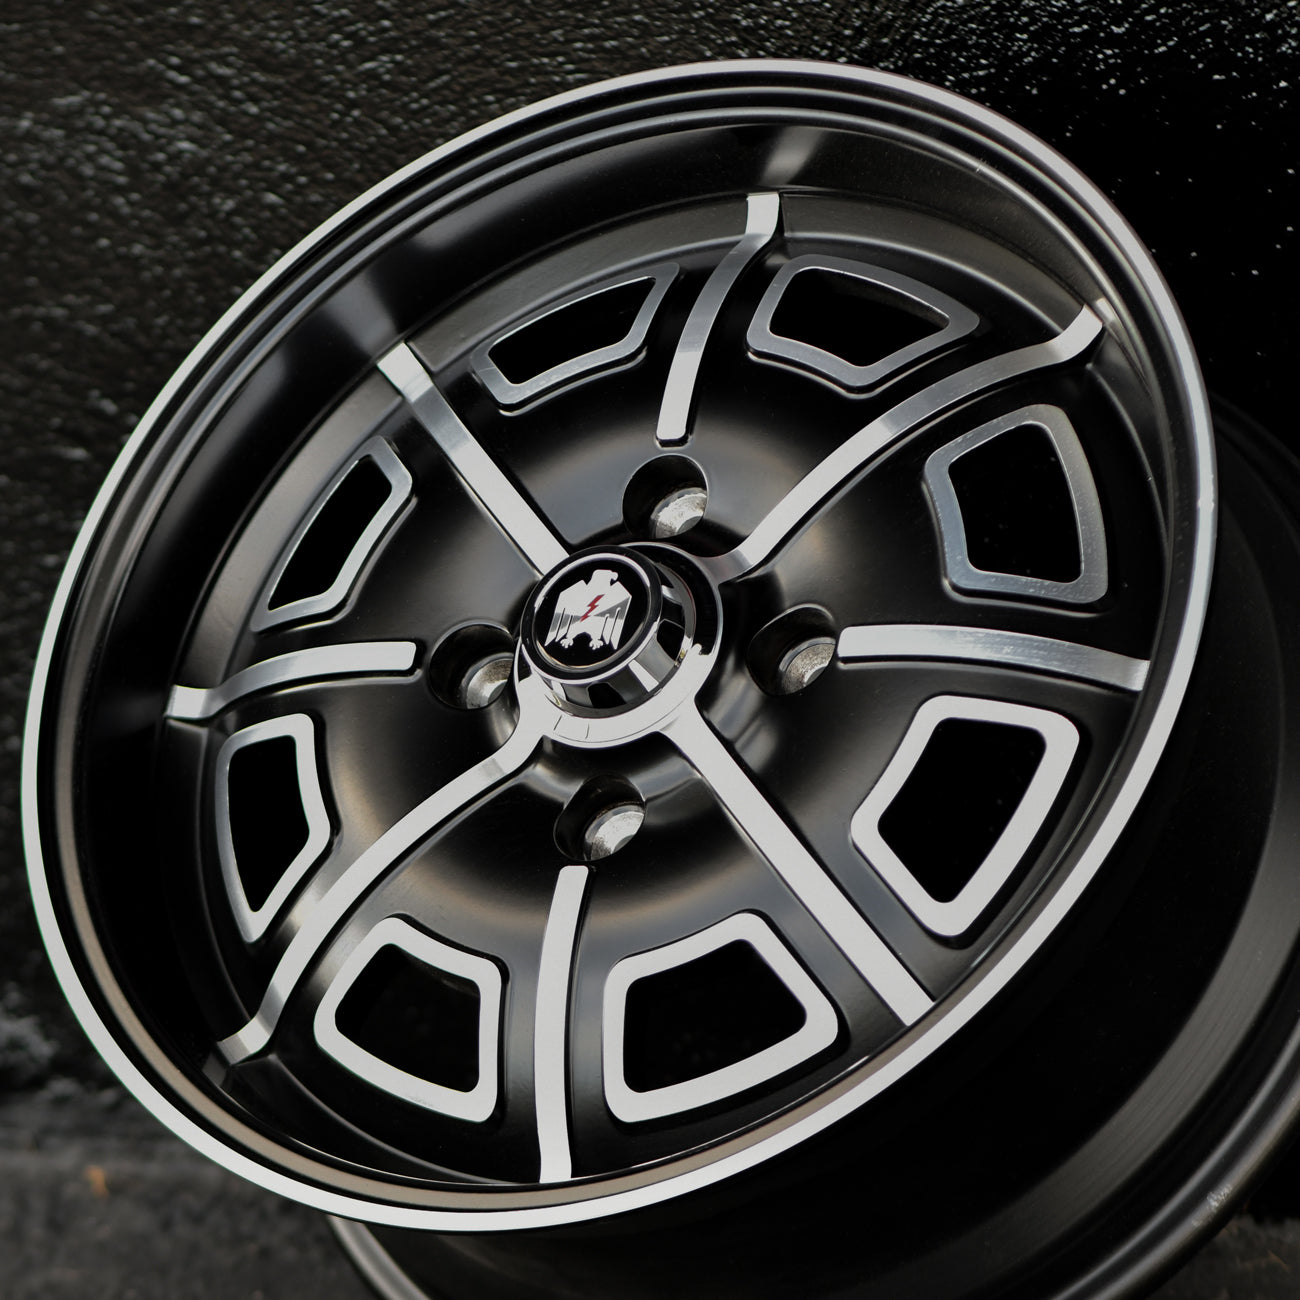 klassik rader wheels pedrino collection button